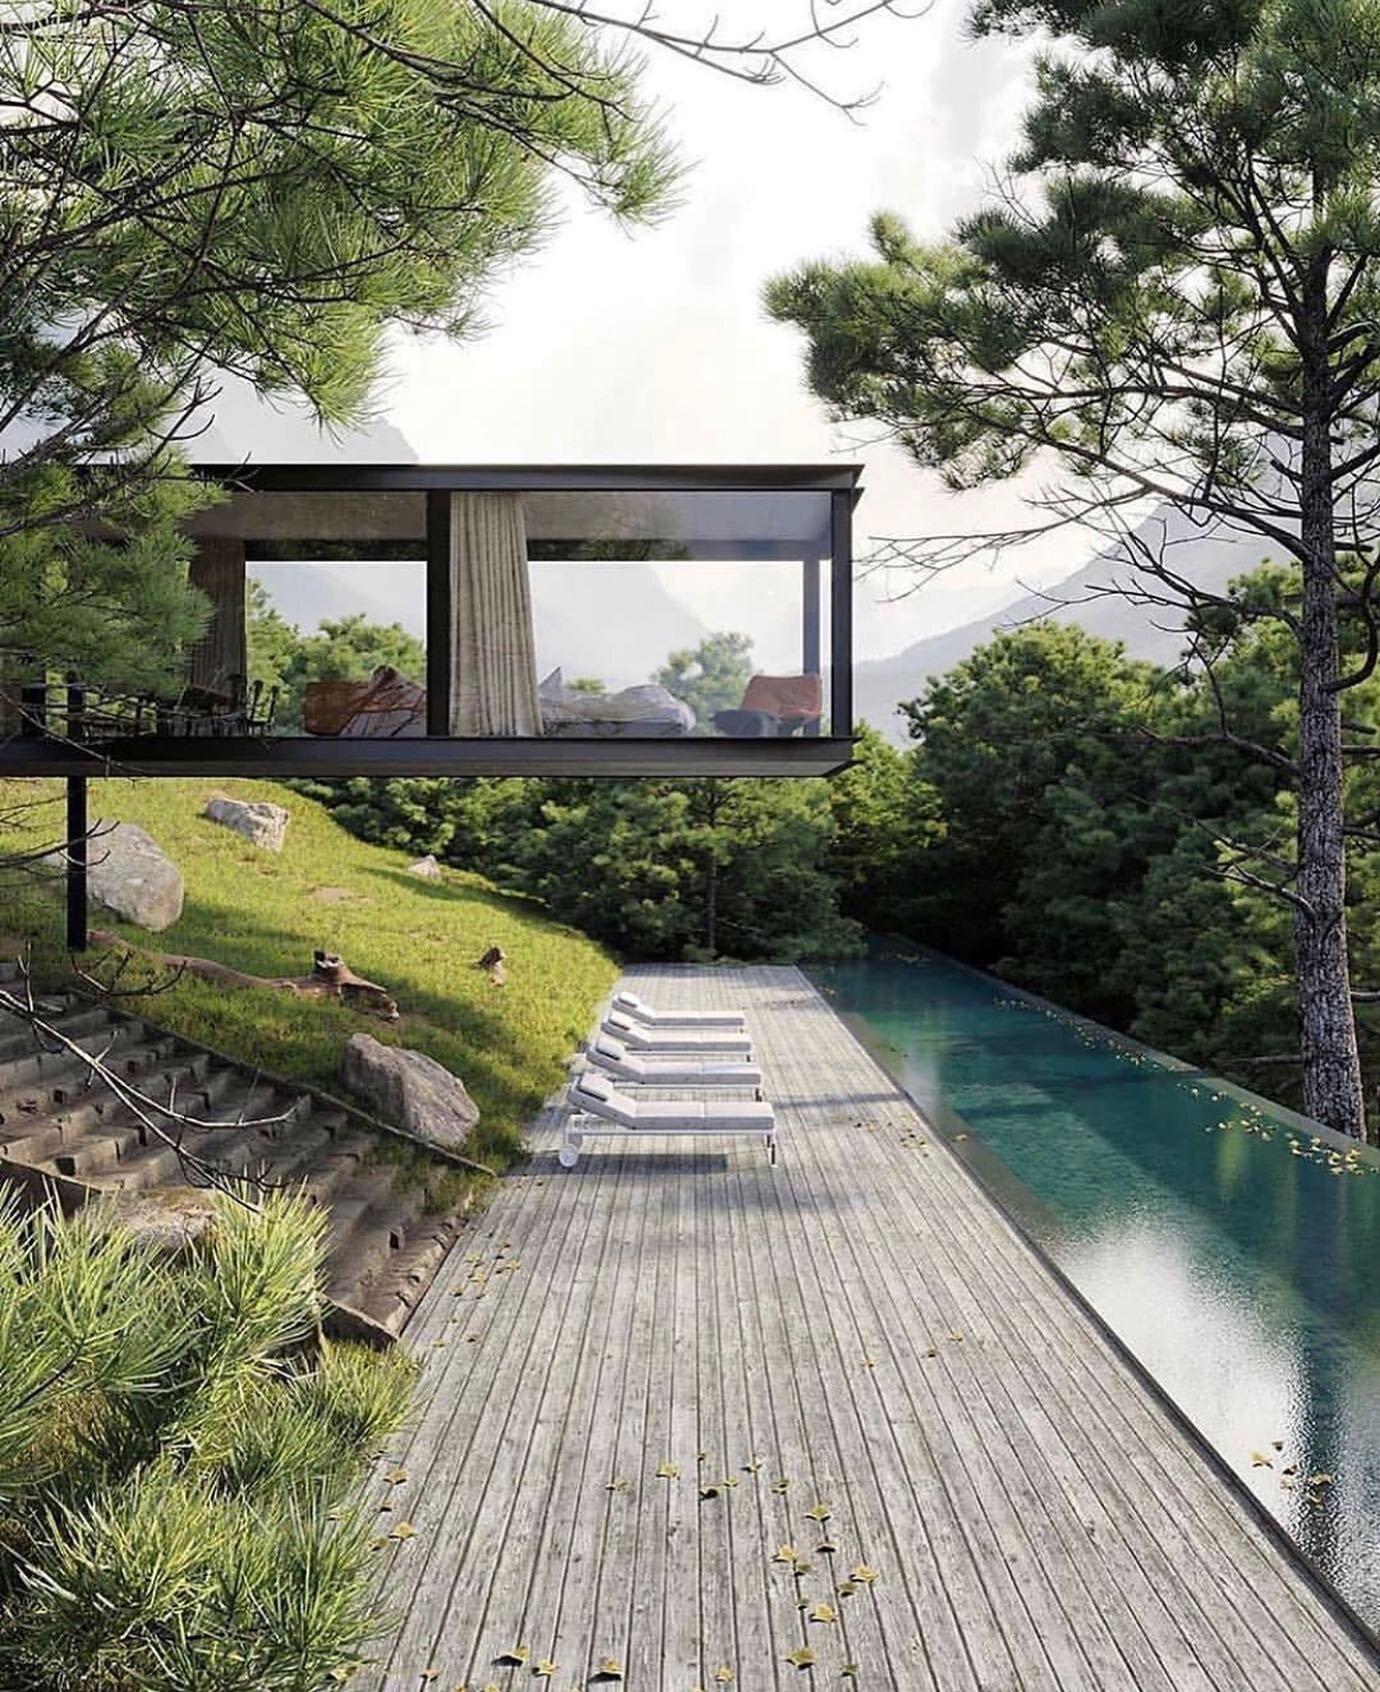 Living life on the edge 🏔Mountain Ridge House designed by @studio_m6  #trustFUN #moodboard